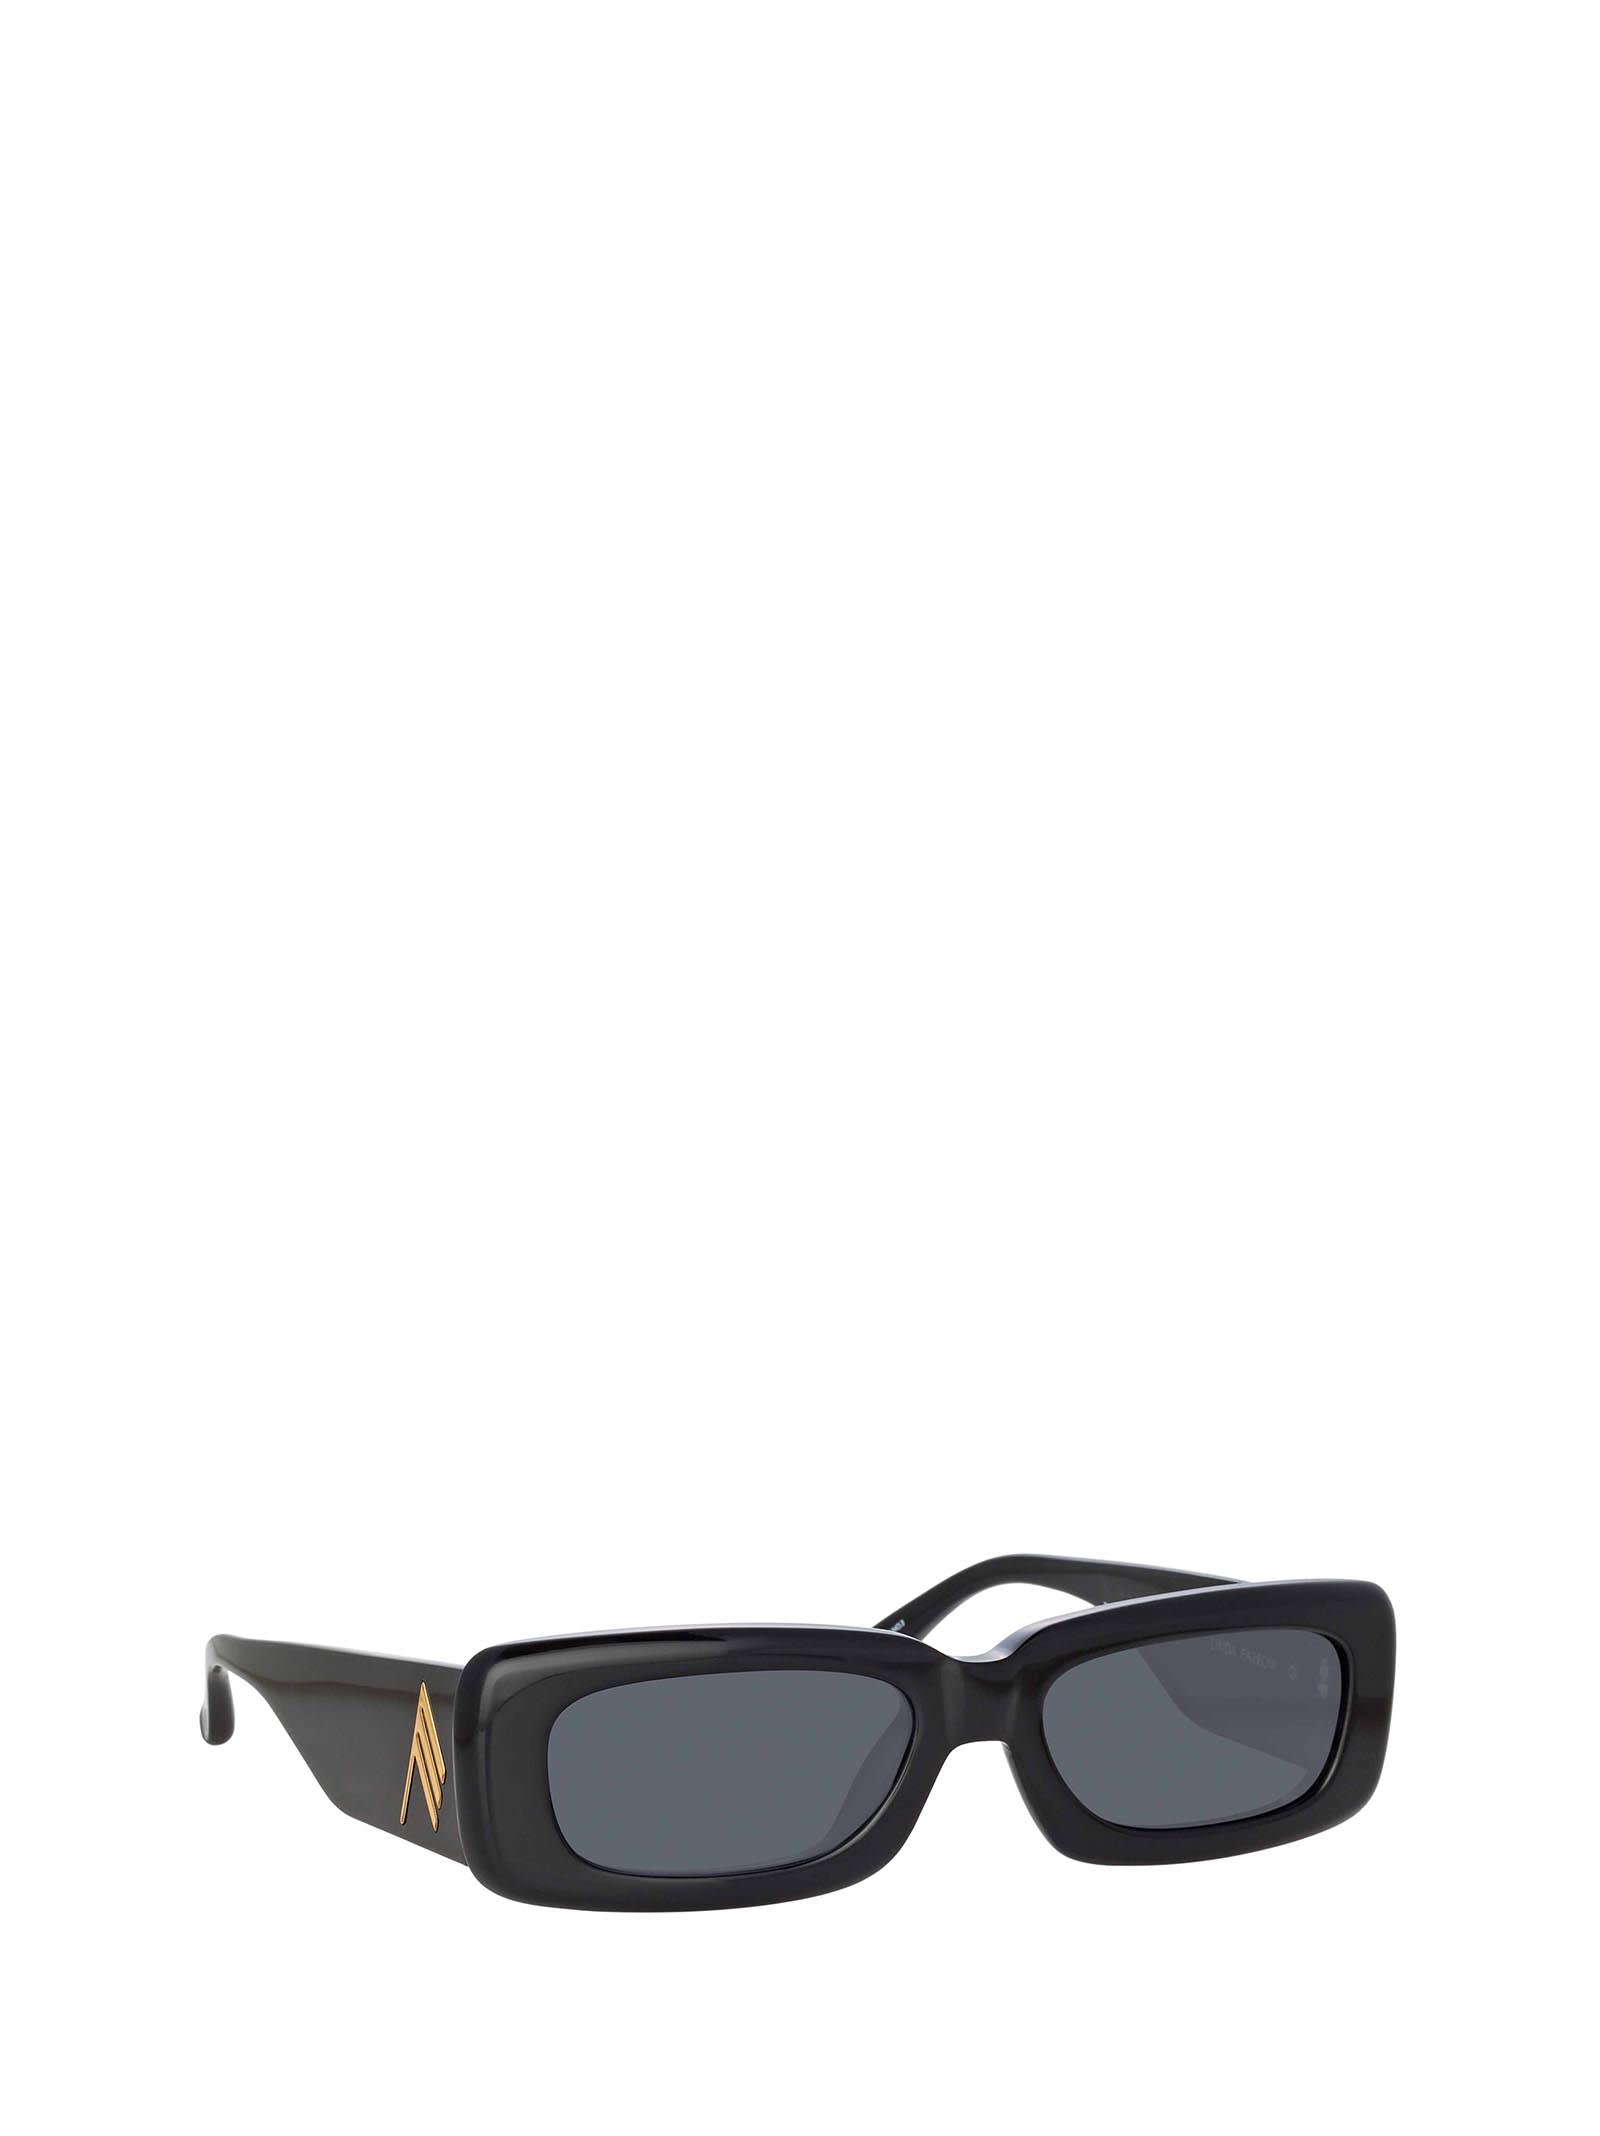 Shop Linda Farrow Attico16 Black / Yellow Gold Sunglasses